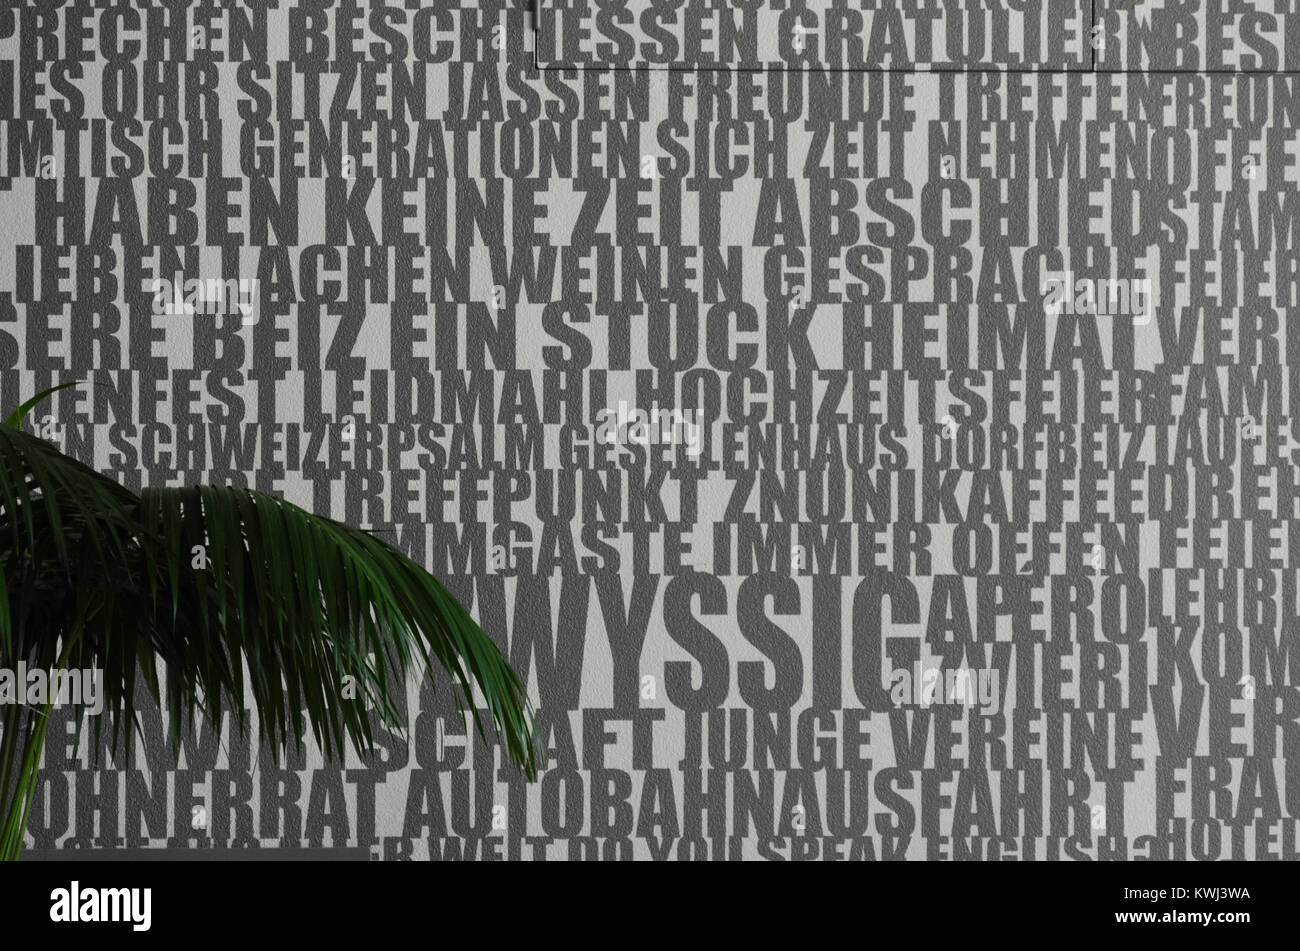 Abstract random German words wallpaper related to/describing hotel or restaurant environment. Stock Photo